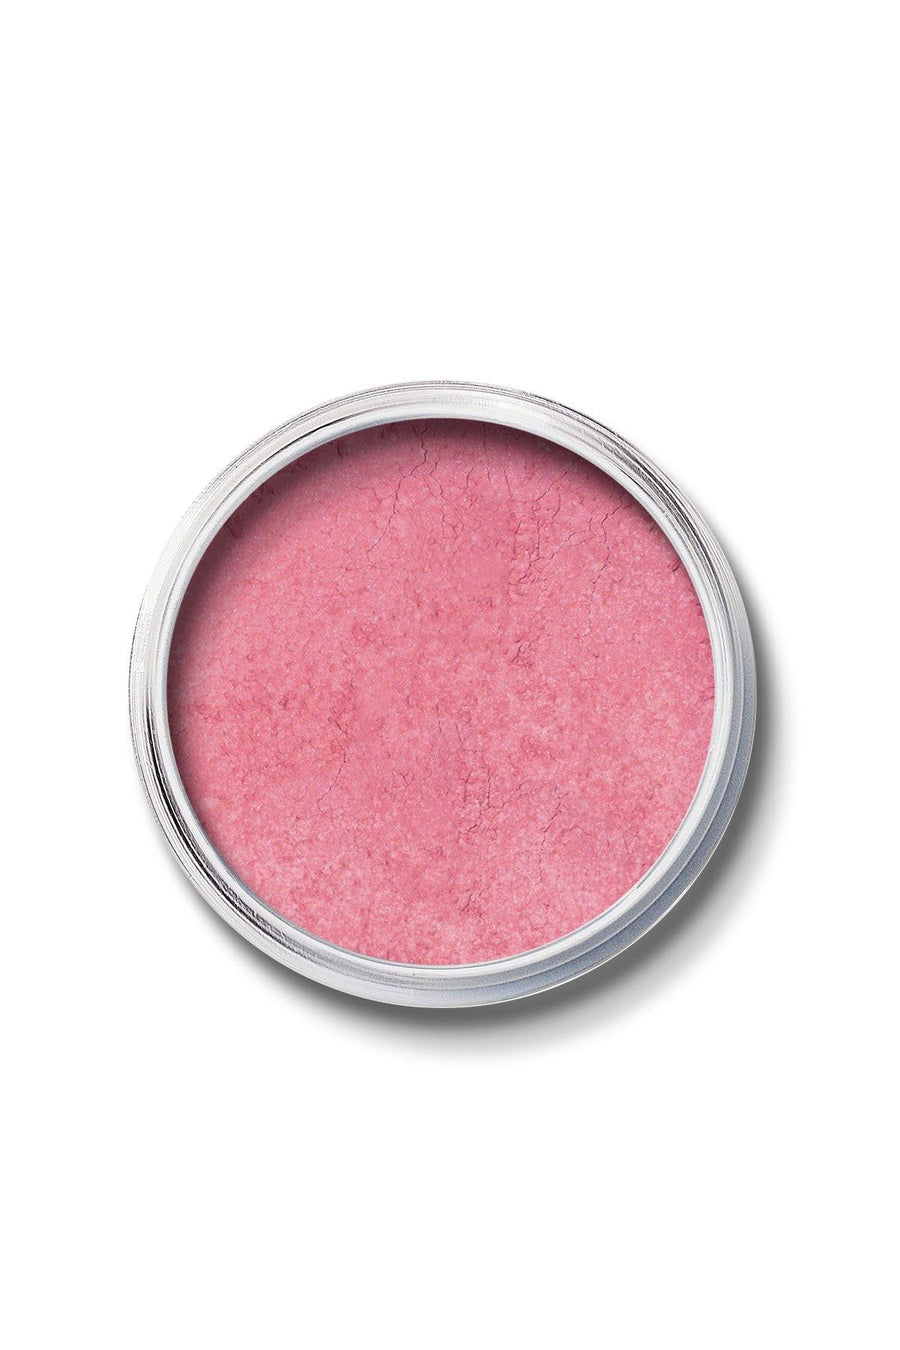 Mineral Blush #10 - Divine Pink - Blend Mineral Cosmetics